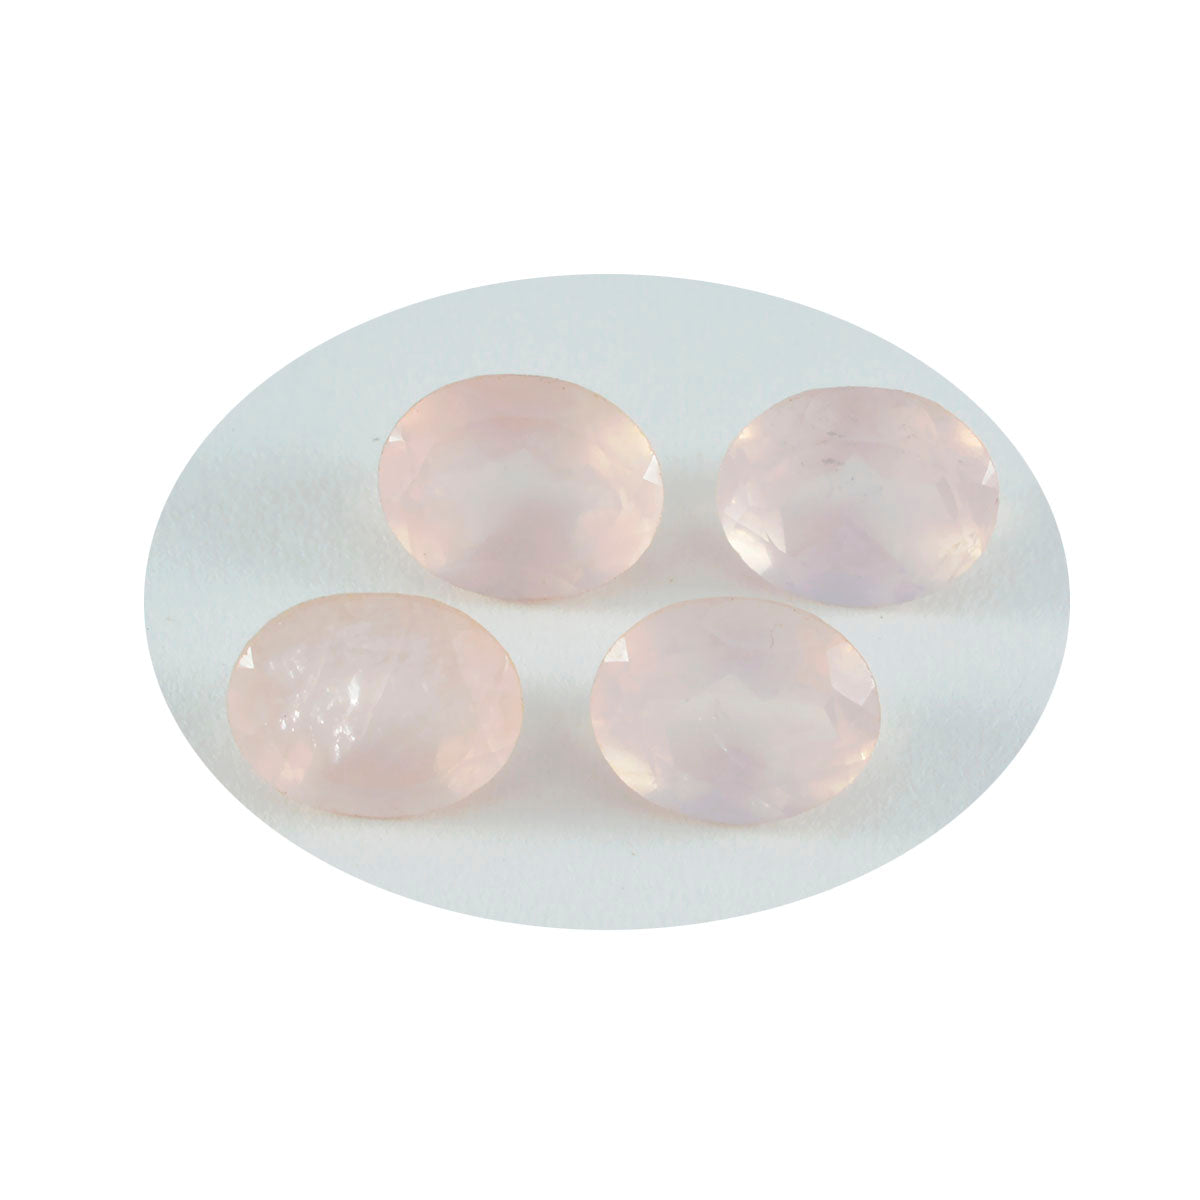 Riyogems 1PC roze rozenkwarts gefacetteerd 10x12 mm ovale vorm geweldige kwaliteit losse edelstenen